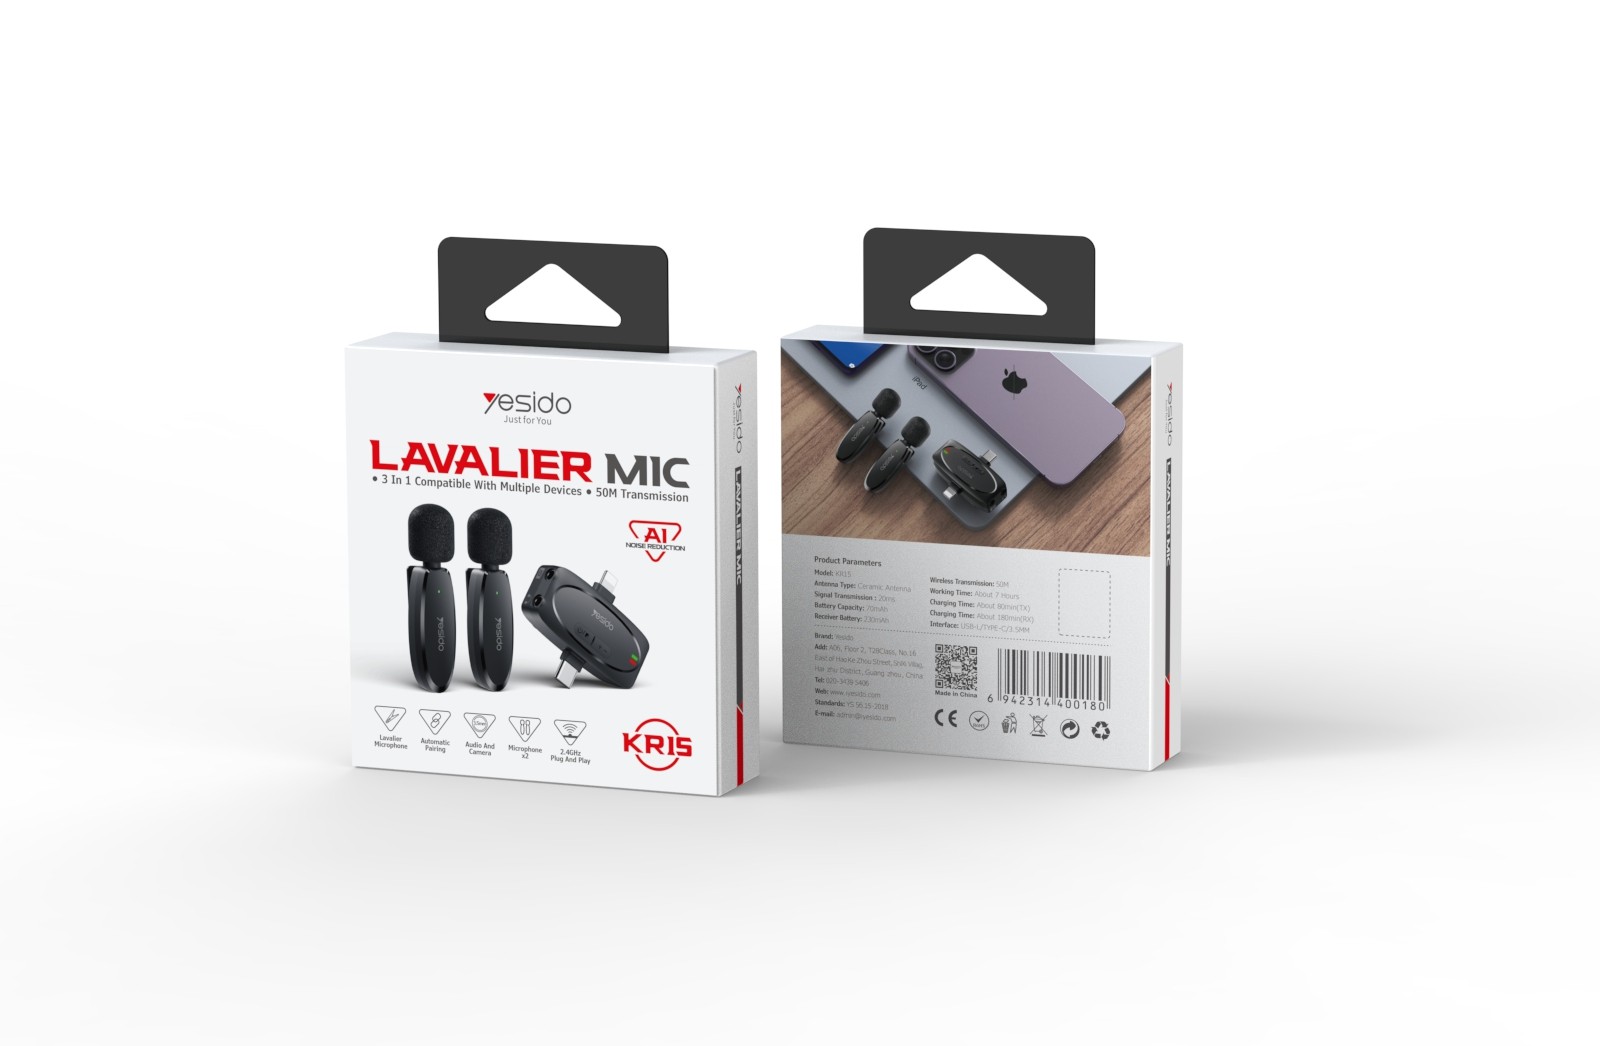 Yesido KR15 2 Wireless MEMS Microphone Packaging